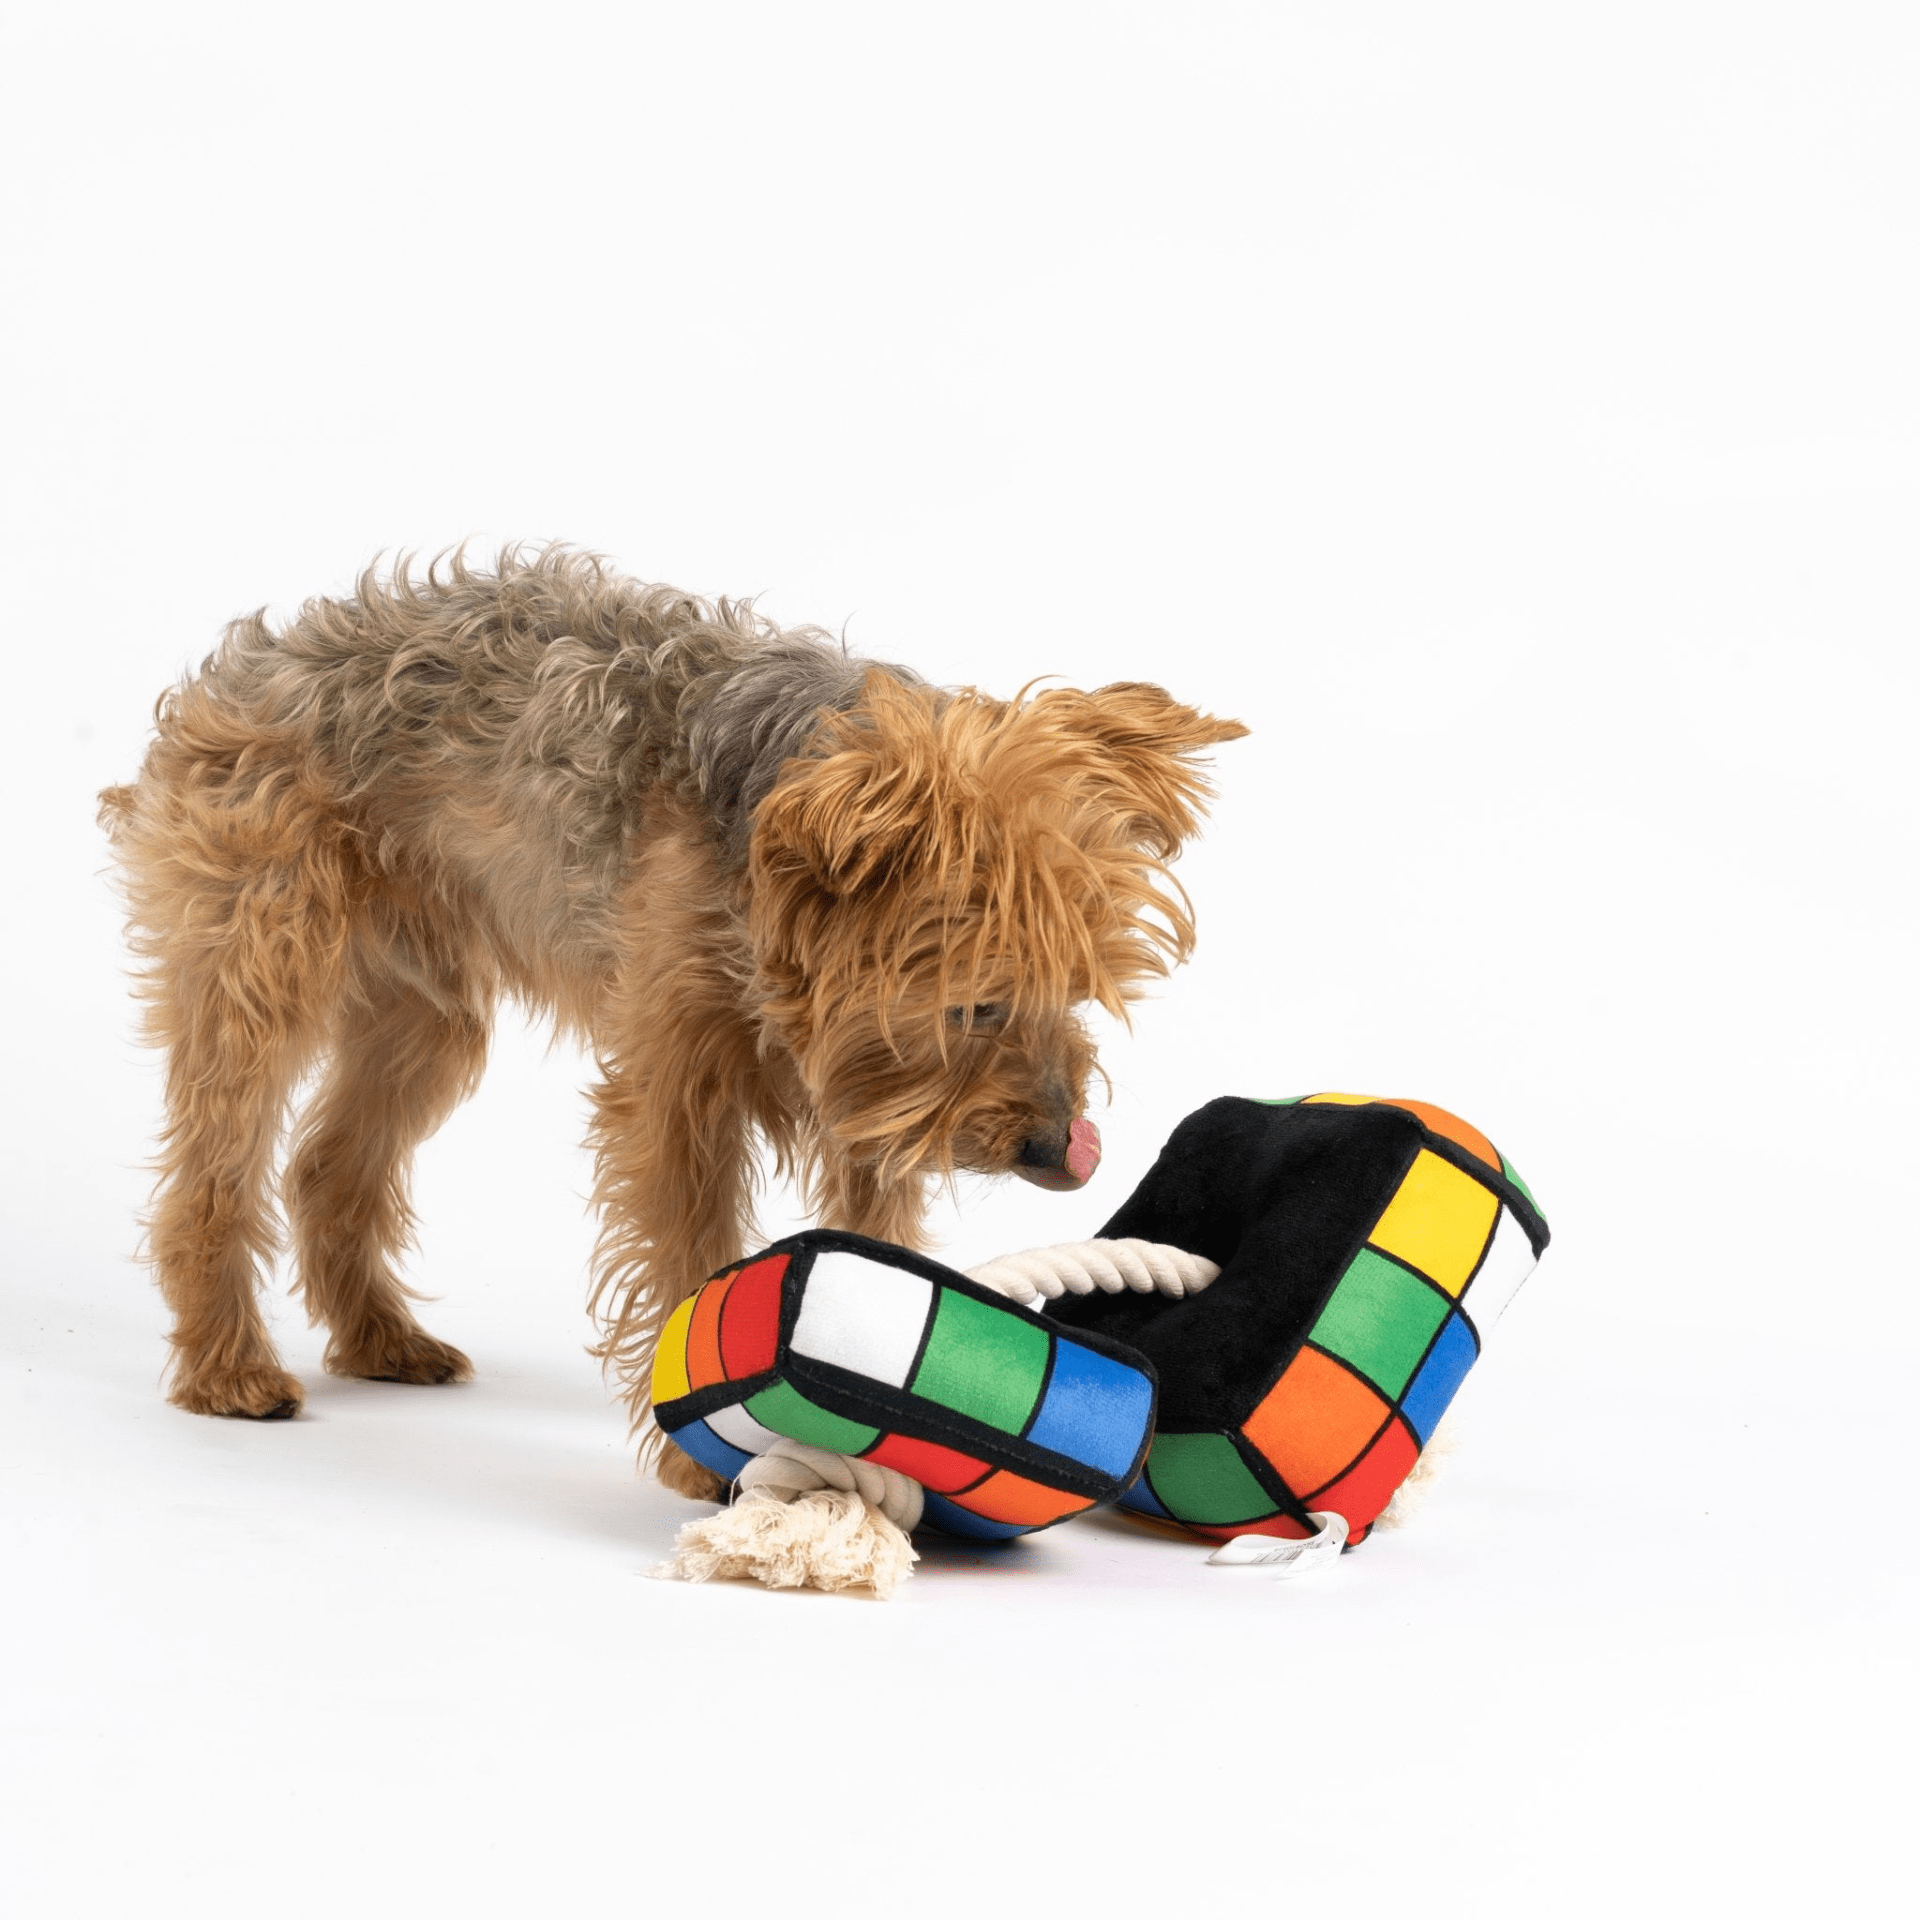 Dog and Pet Stuff Robix Cube Dog Toy